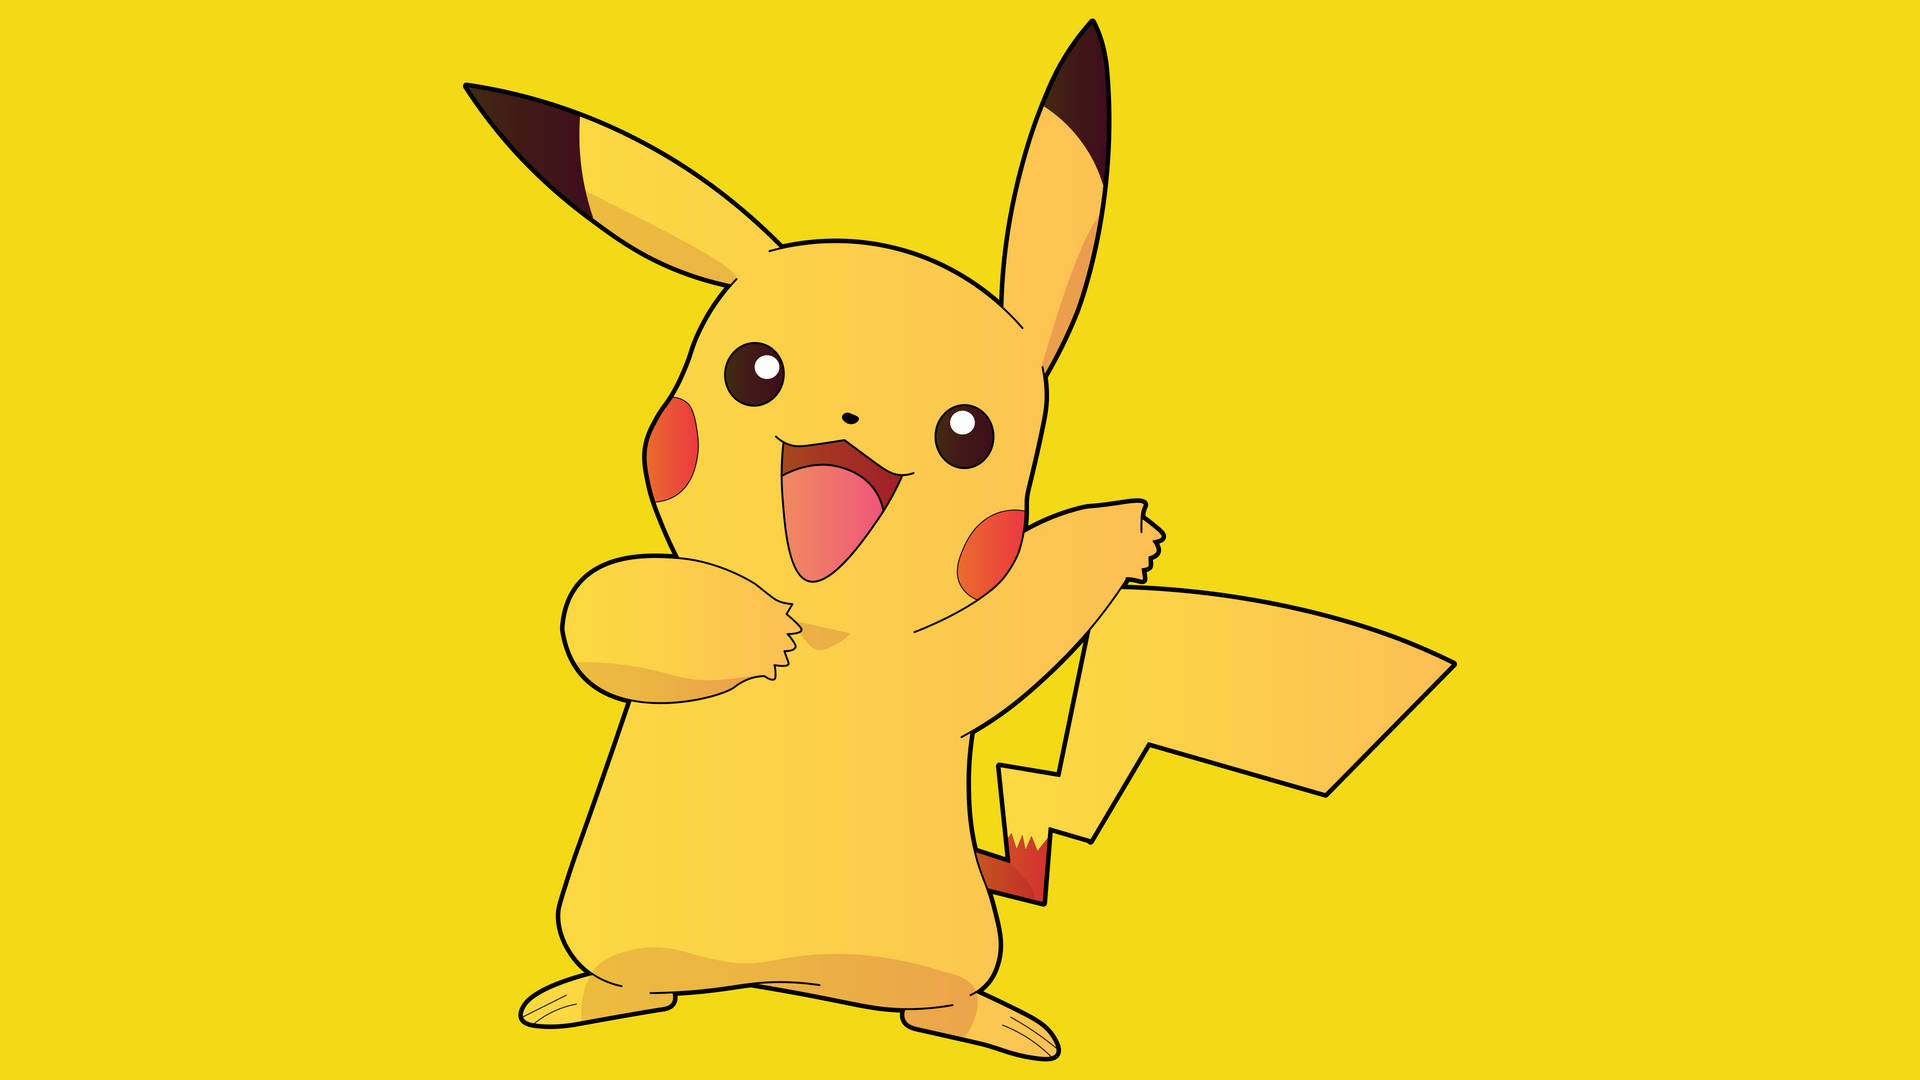 Free Pikachu 4k Wallpaper Downloads, [100+] Pikachu 4k Wallpapers for FREE  